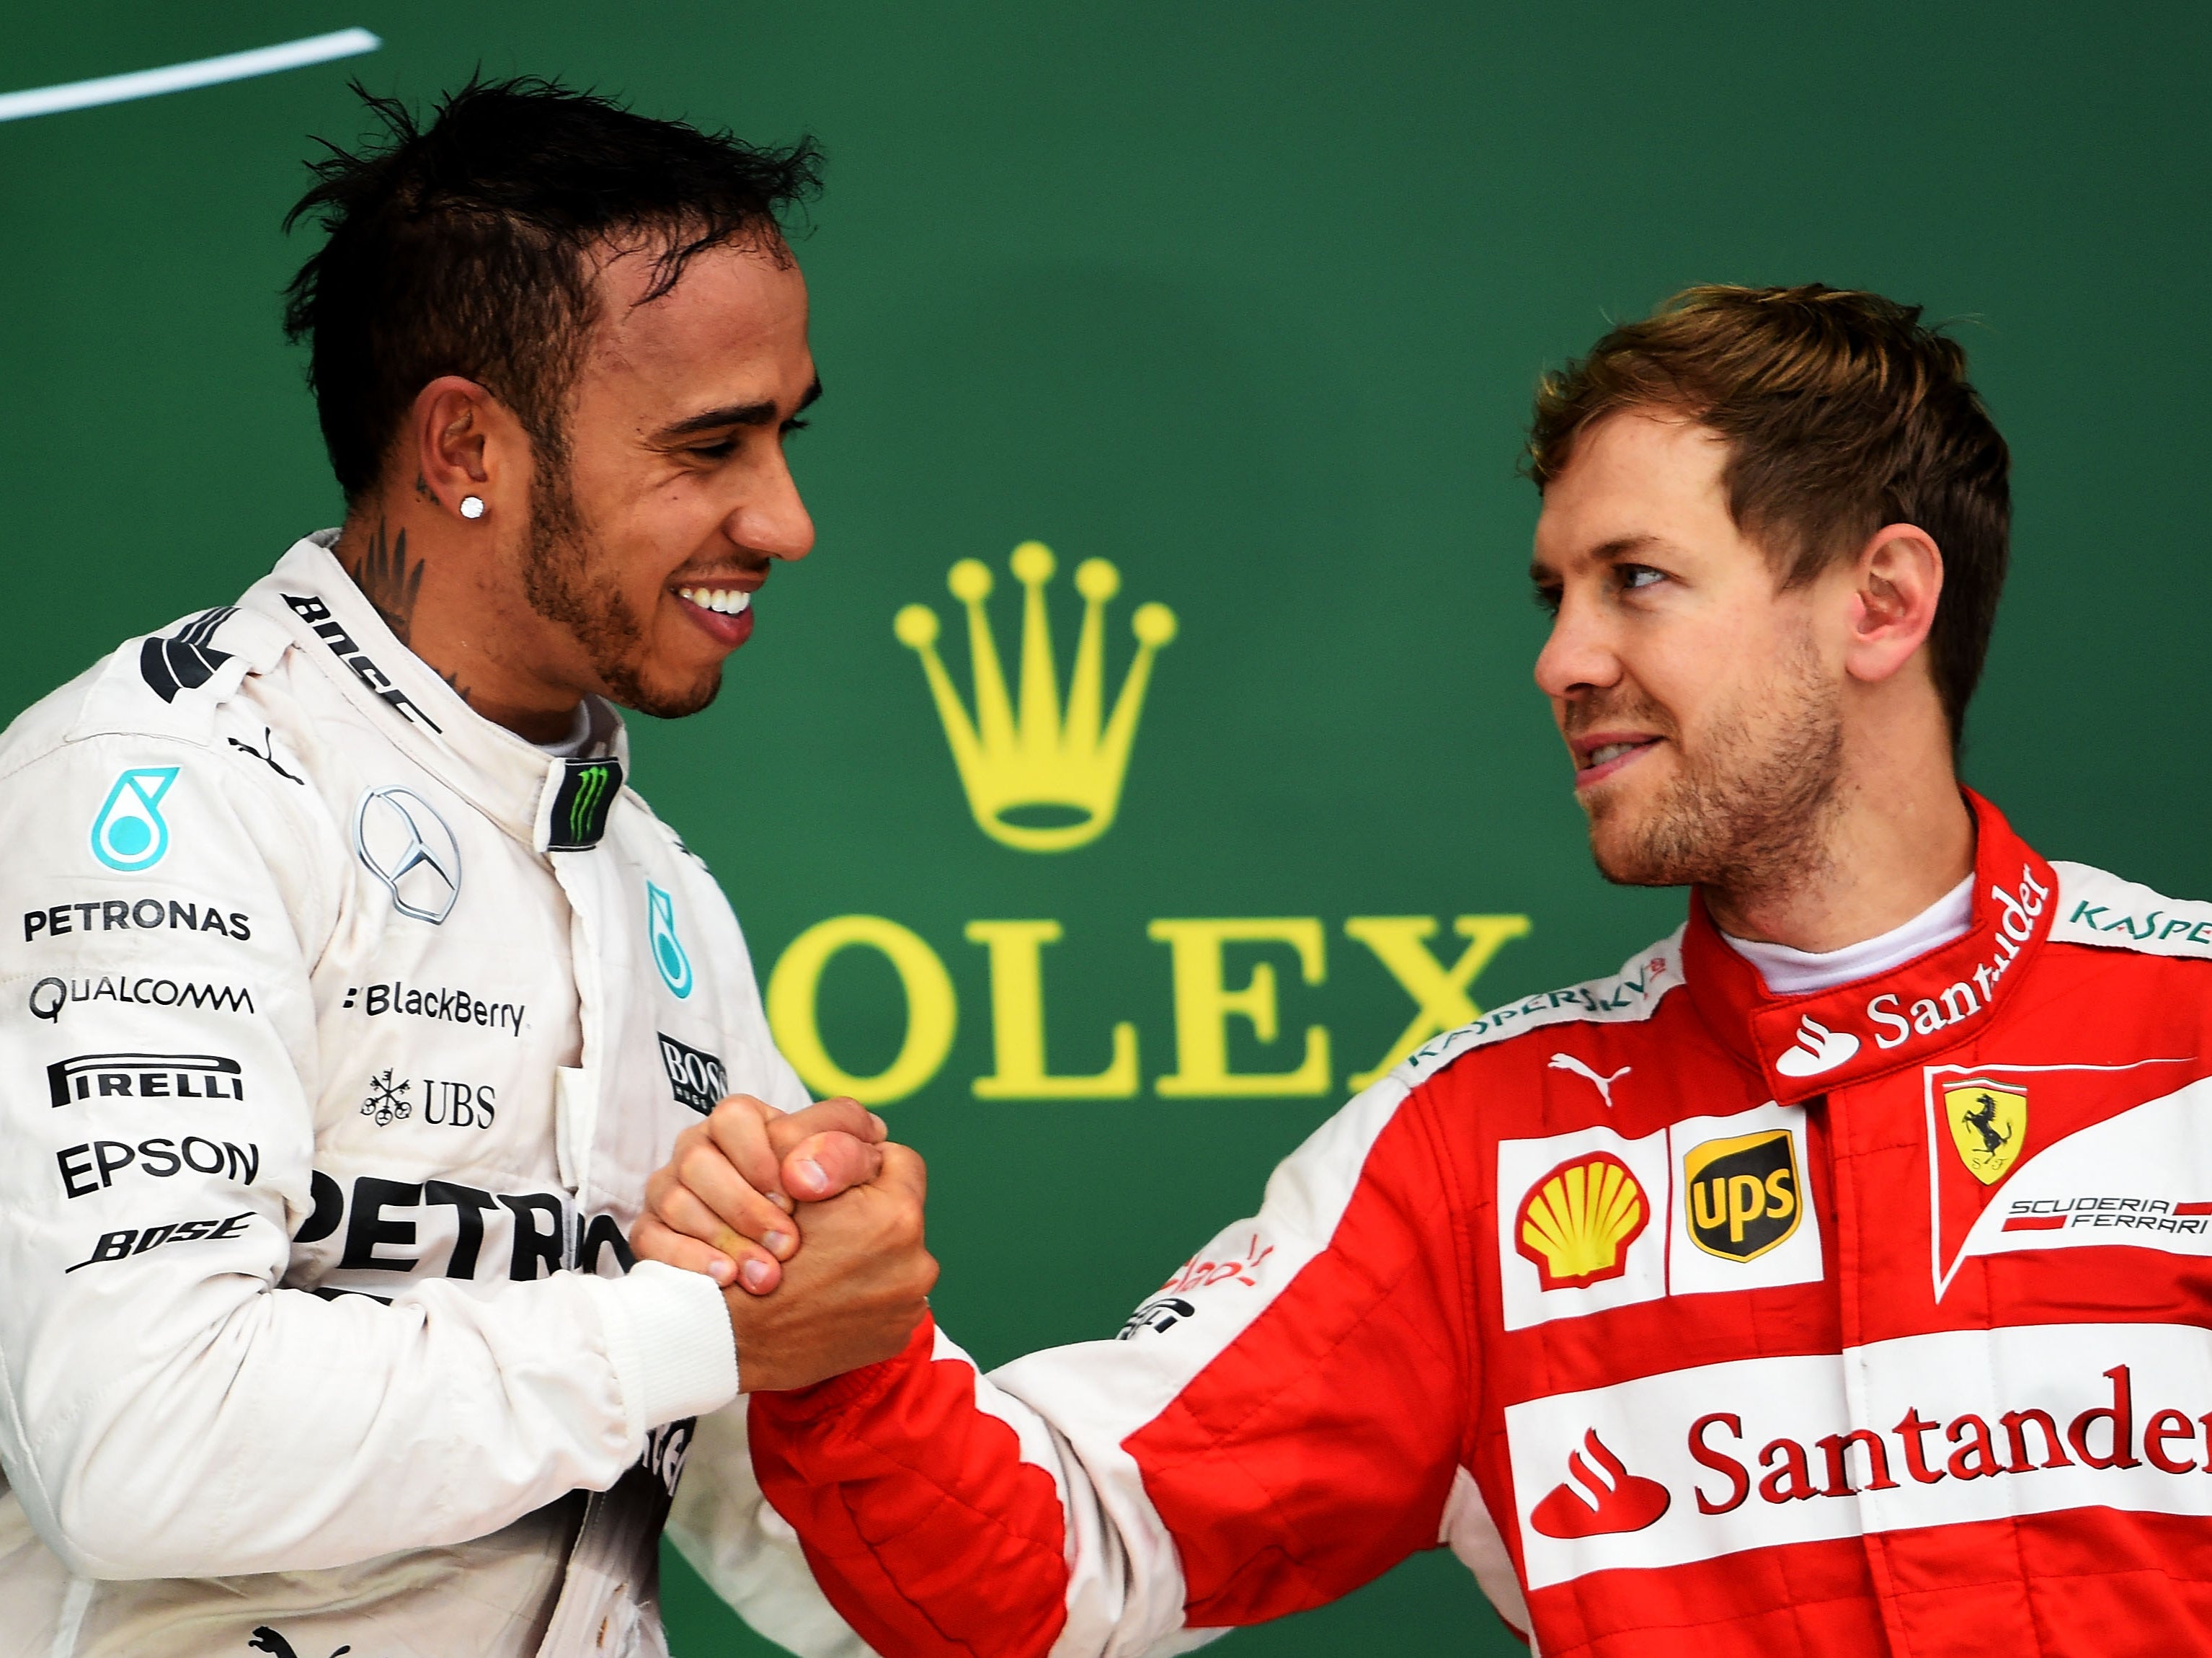 Lewis Hamilton (left) and Sebastian Vettel in 2015